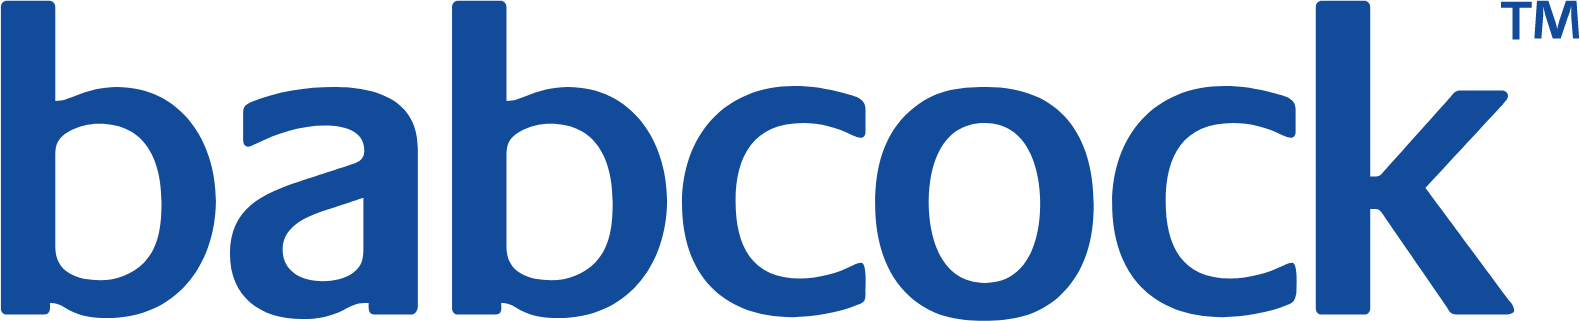 Babcock International Group logo large (transparent PNG)